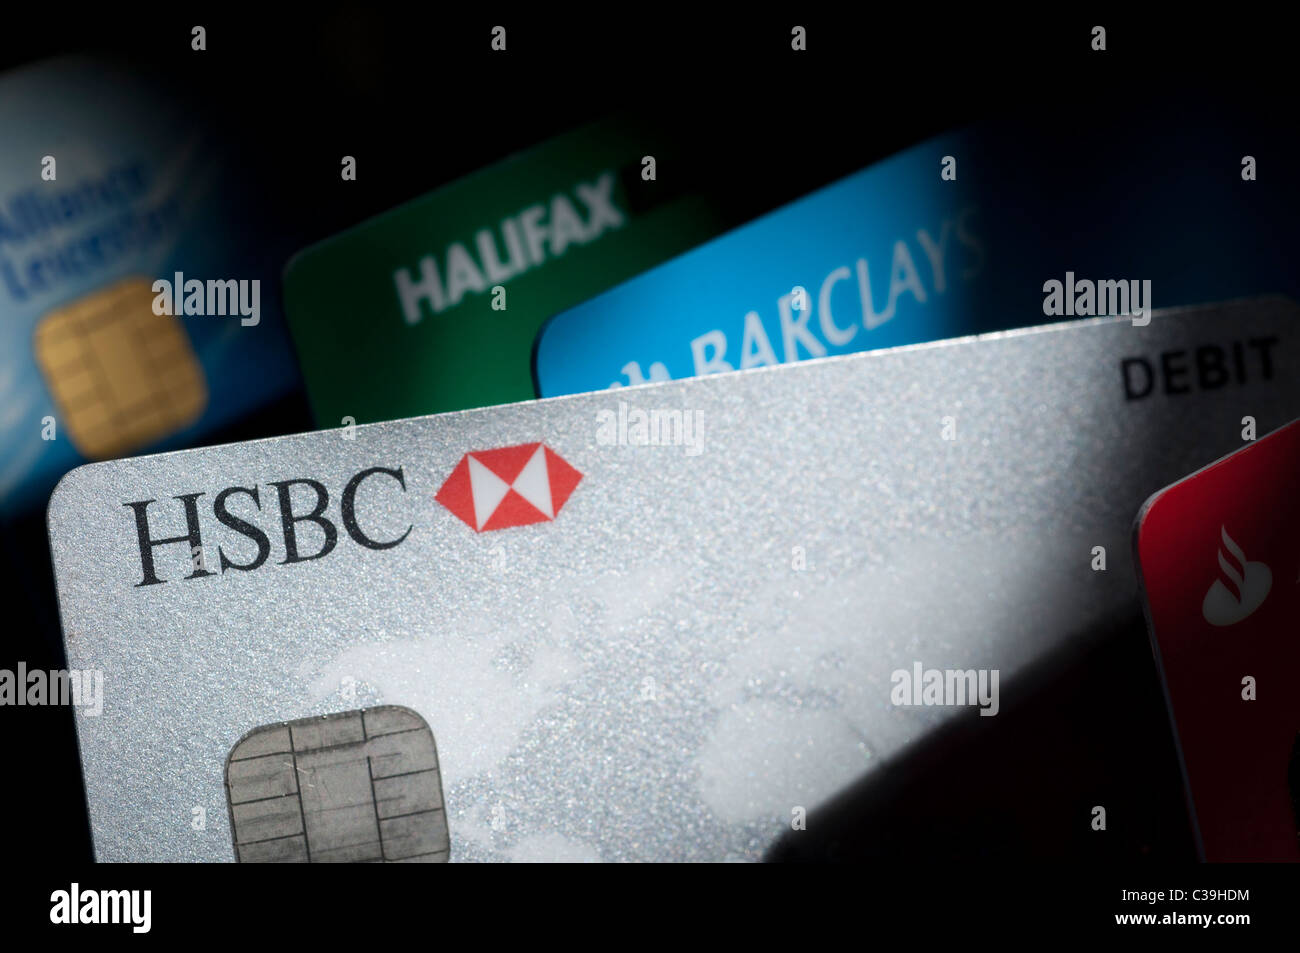 A HSBC current account debit card. Stock Photo